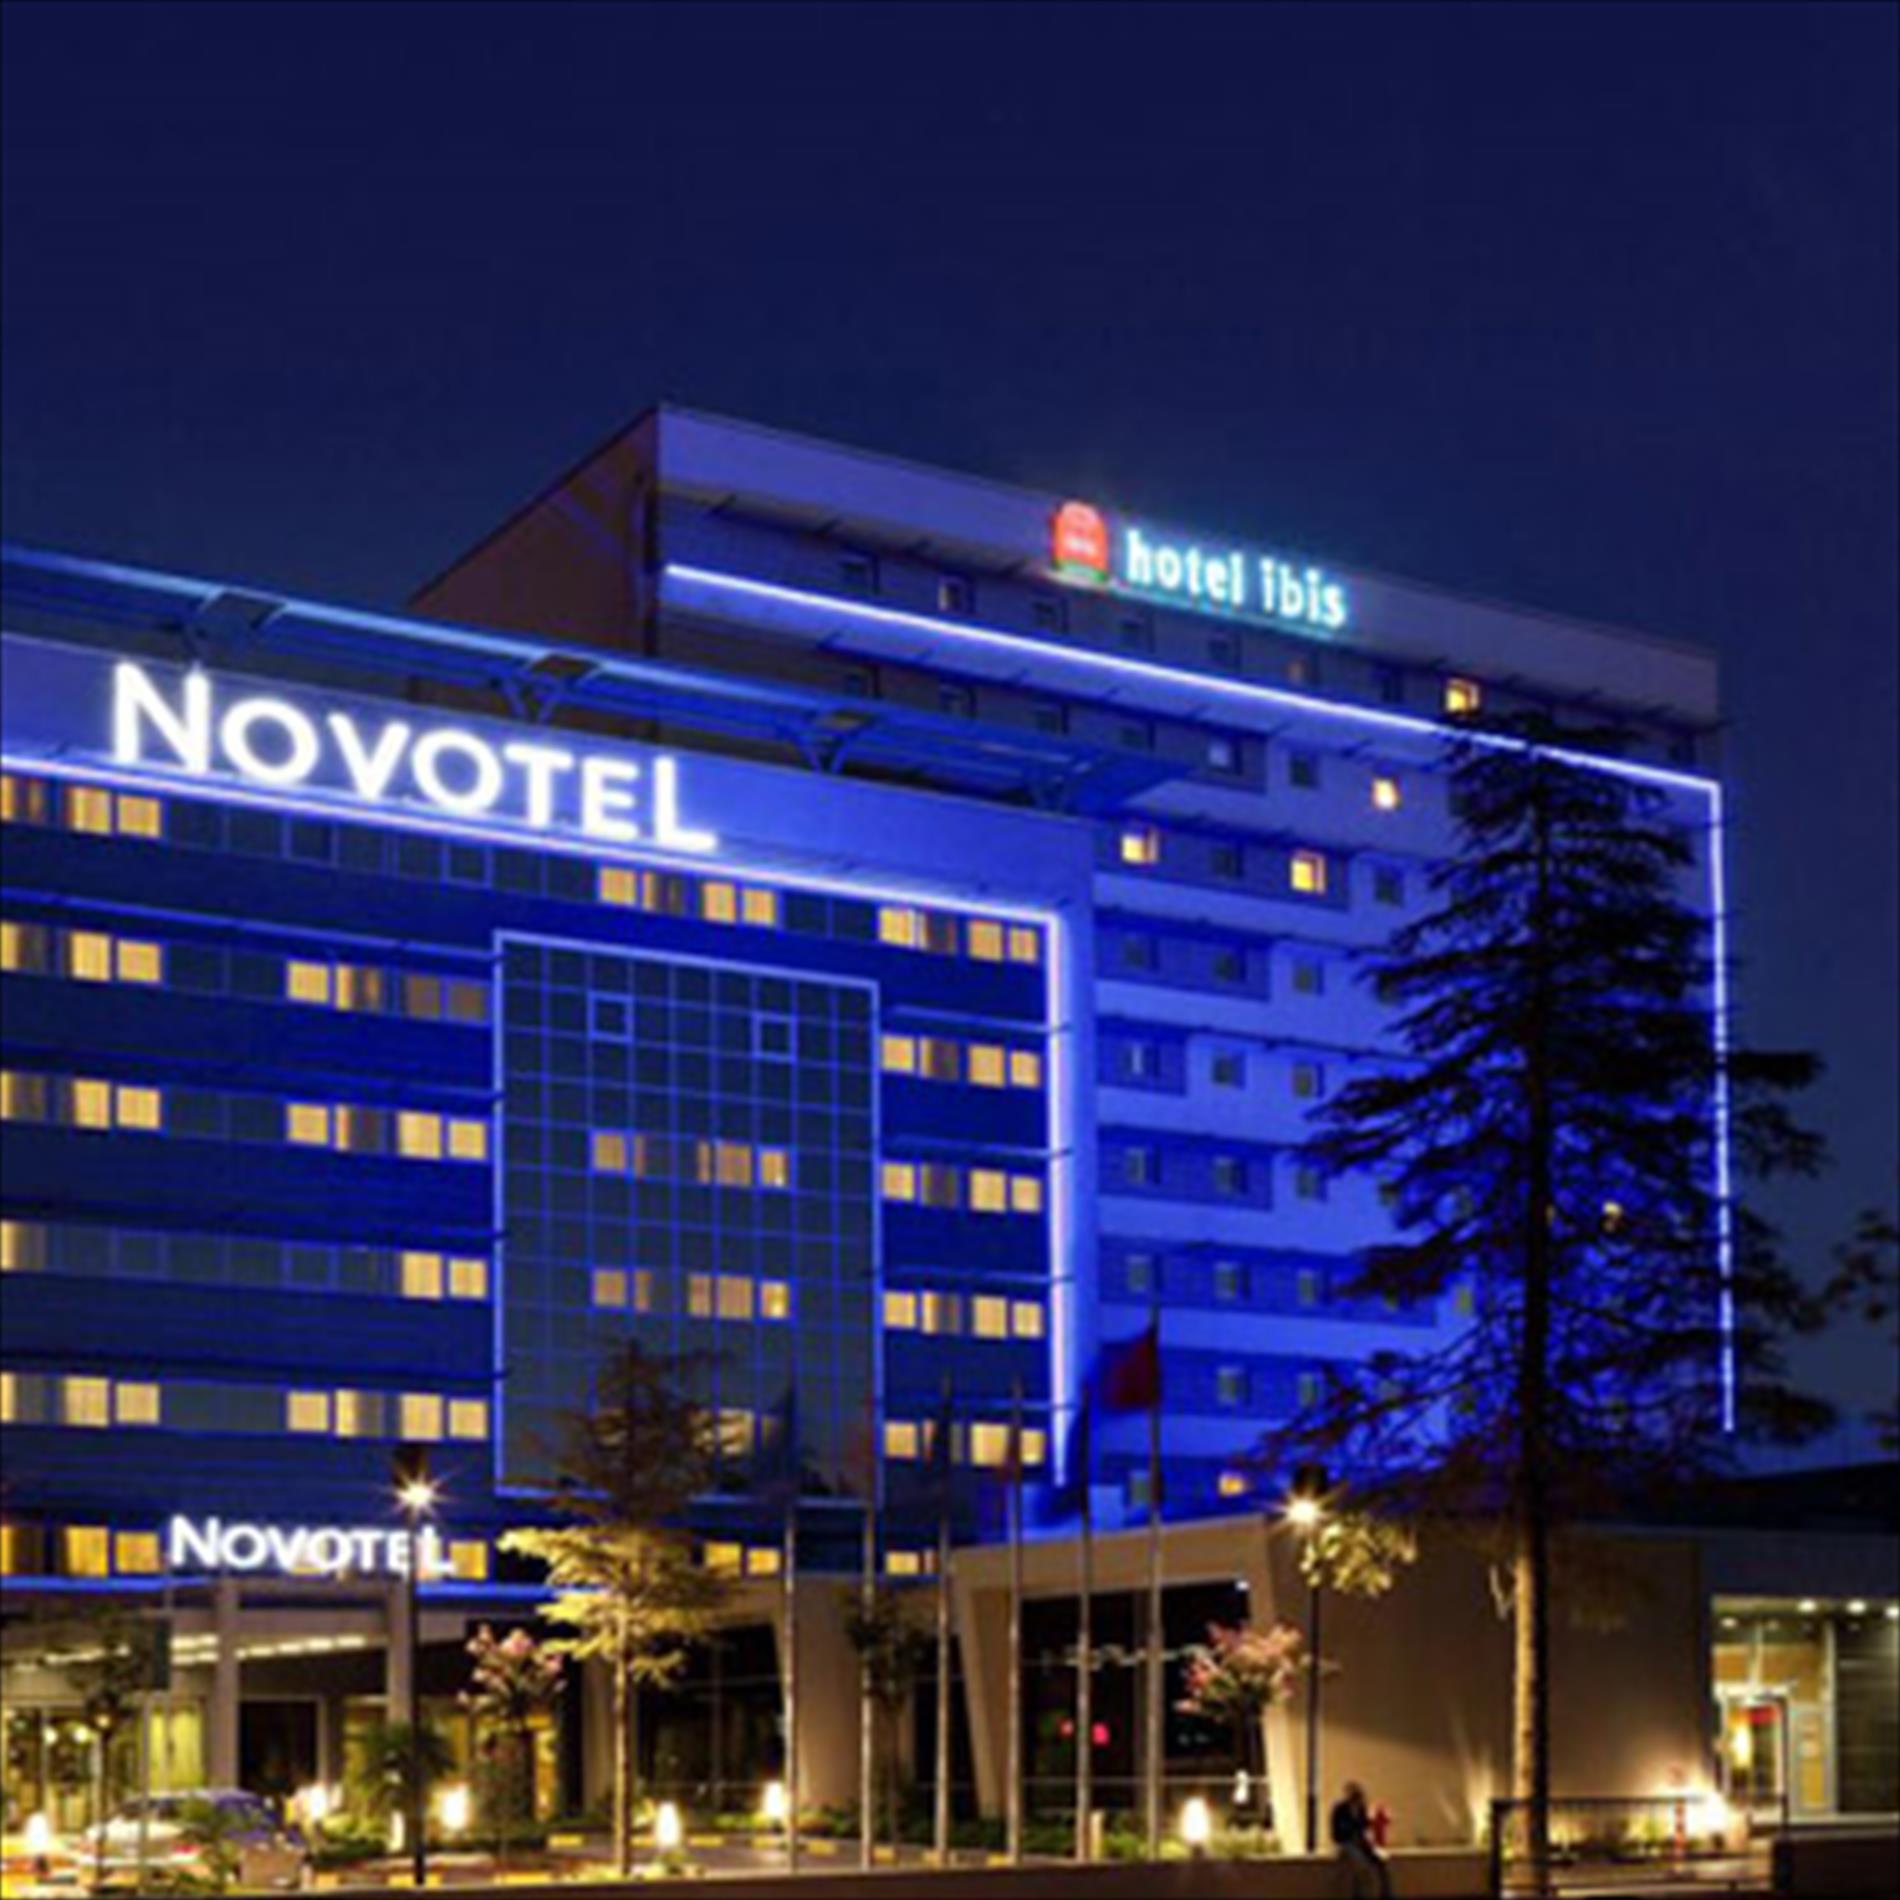 Novotel, Ibis Hotel